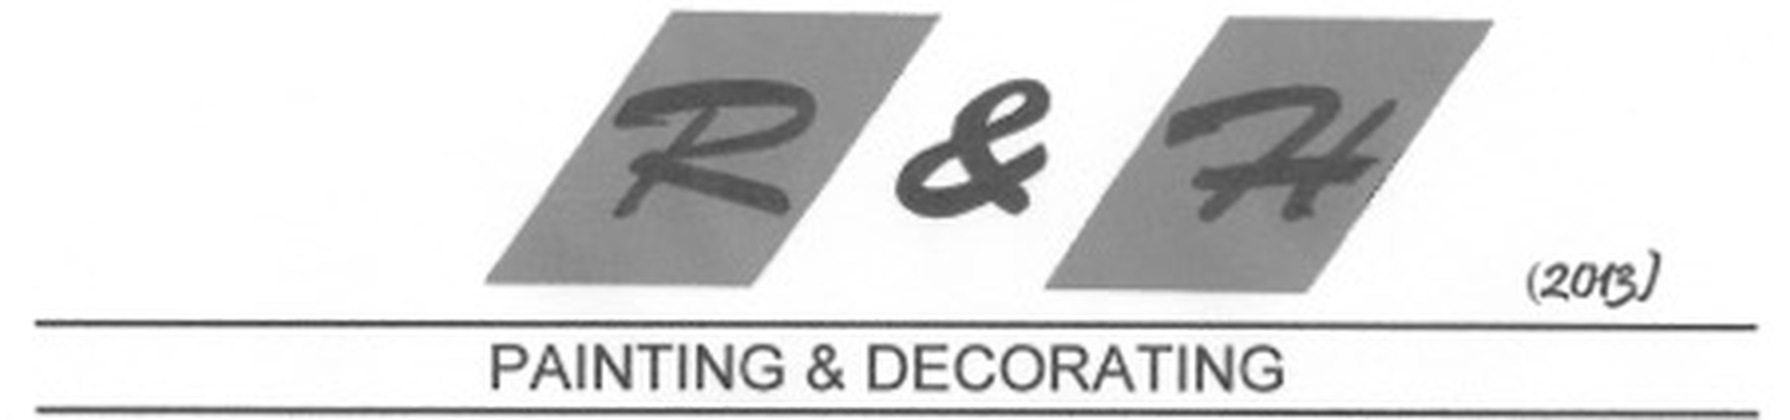 R&H (2013) Painting & Decorating Ltd.